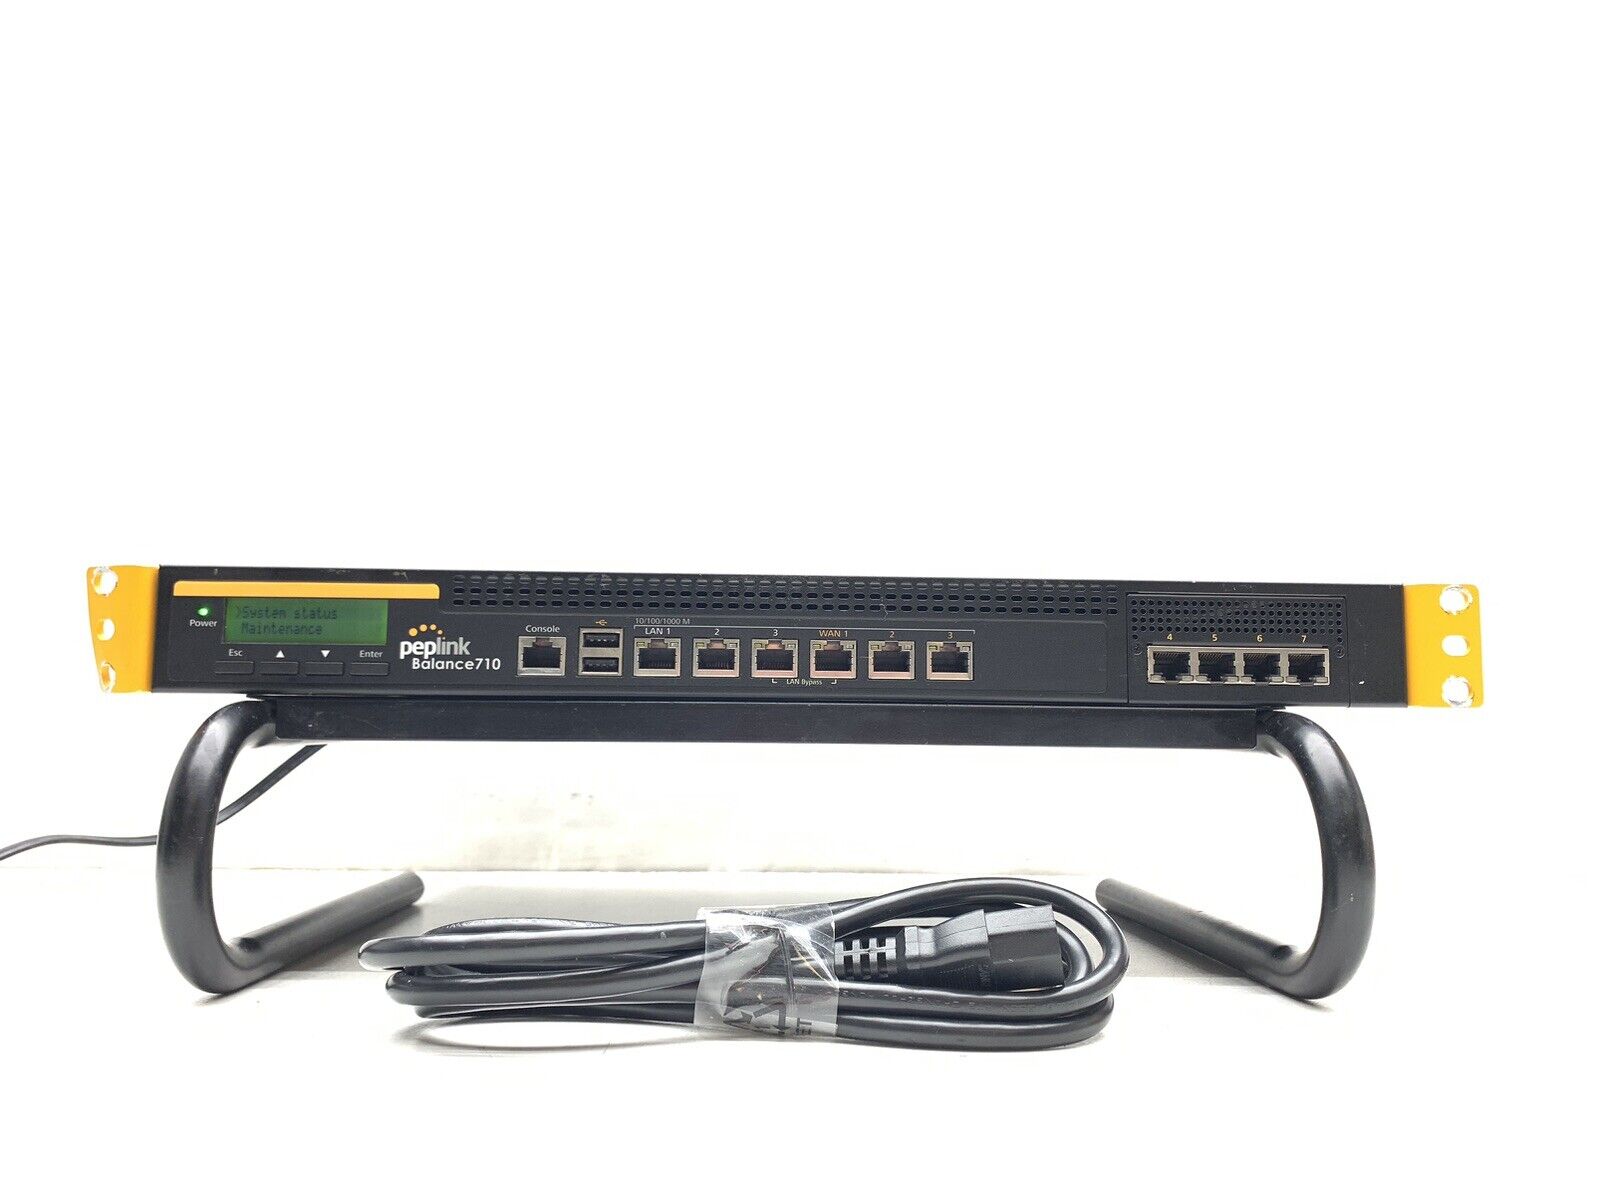 Peplink BPL-710 Balance 710 Multi-WAN Bonding Router WAN LAN FW 6.3.4 HW 1